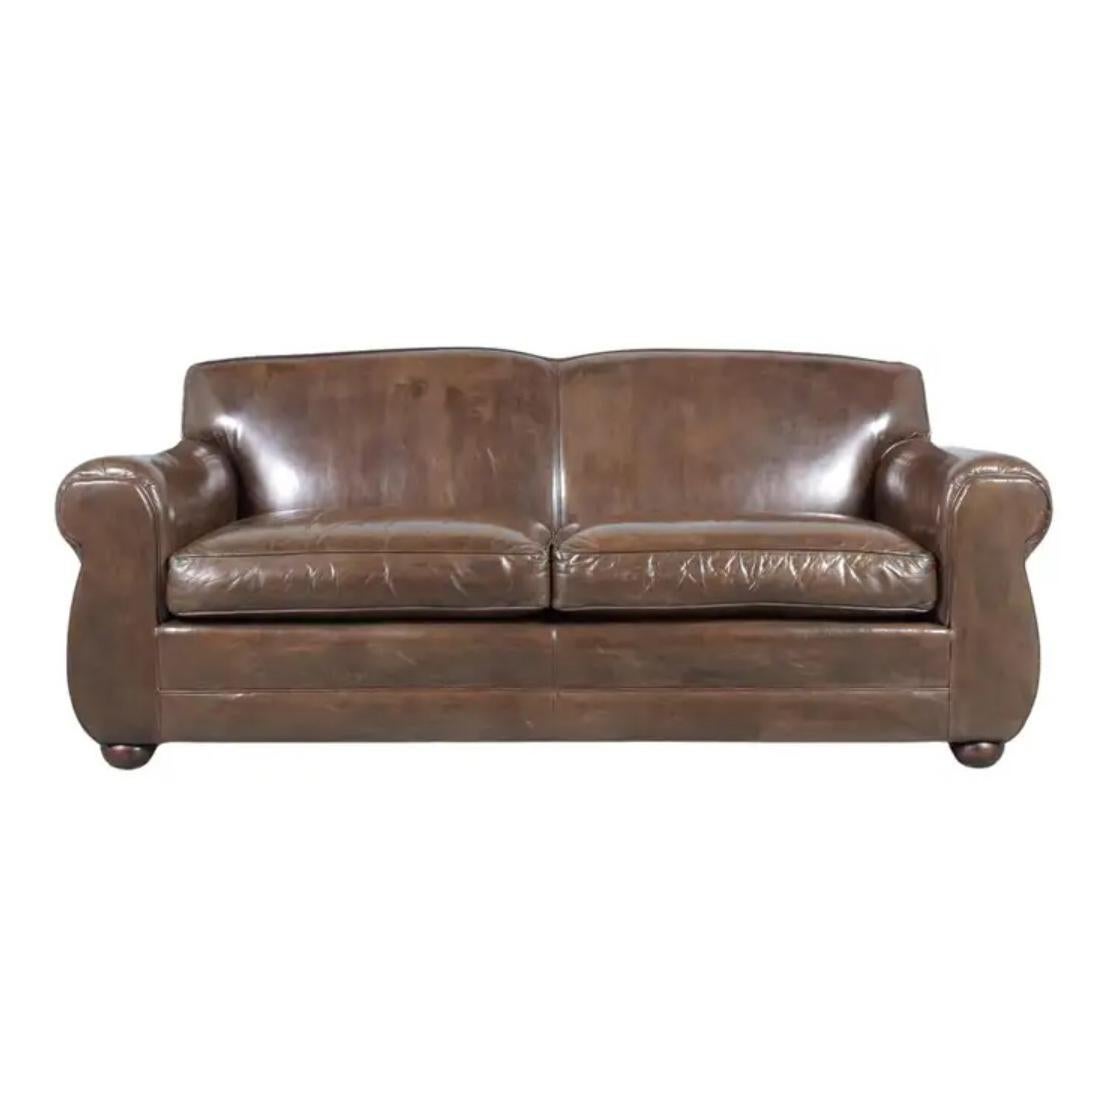 The Moderns Club Sofa en cuir : Elegance Timeless et confort luxueux